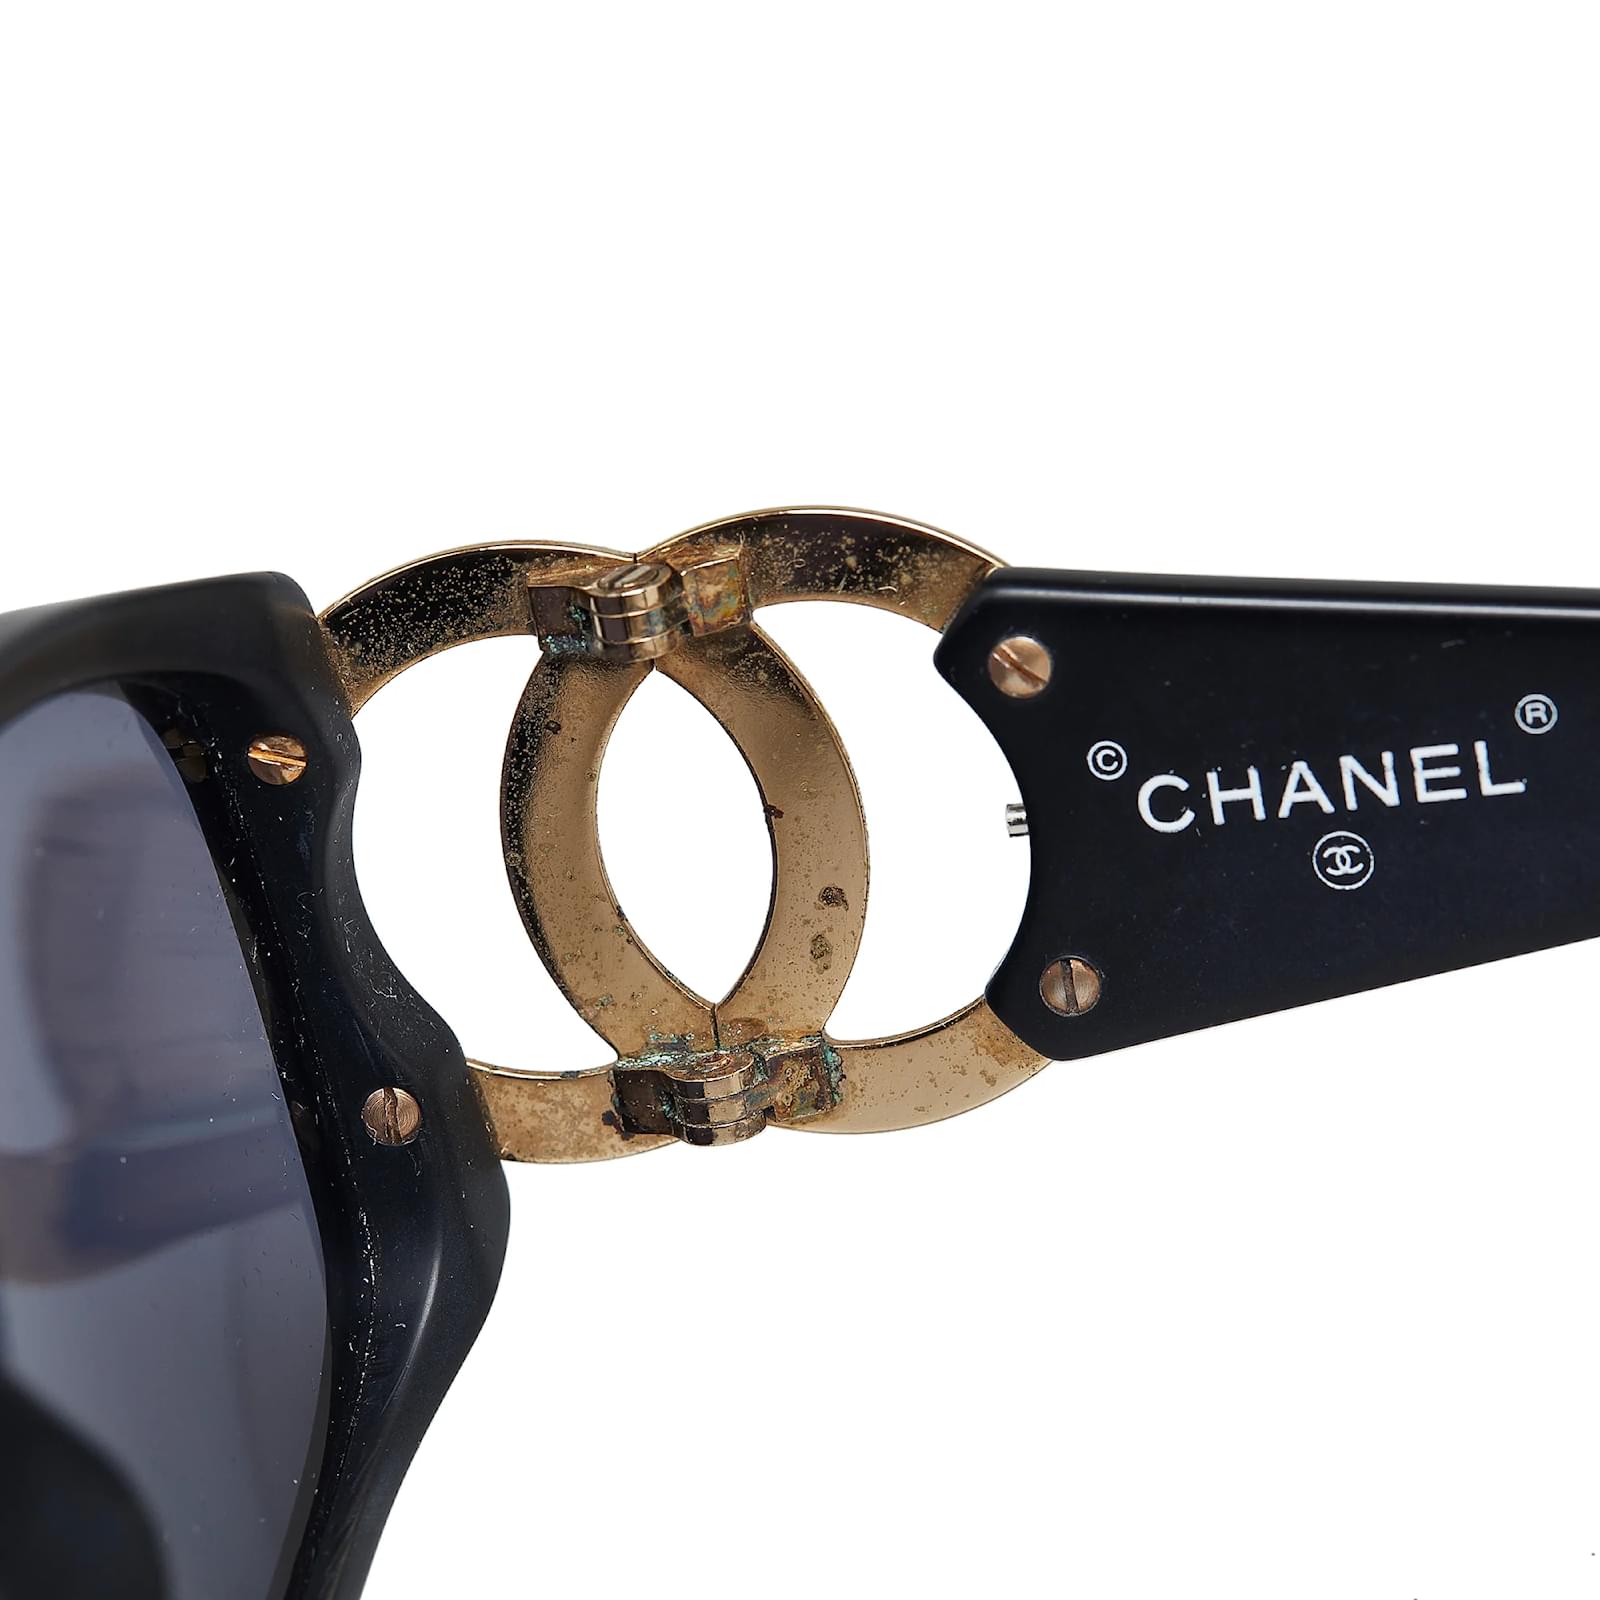 Hula Hoop Bags and Kitschy Coco Sunglasses at Chanel | Chanel bag, Chanel  handbags, Big purses